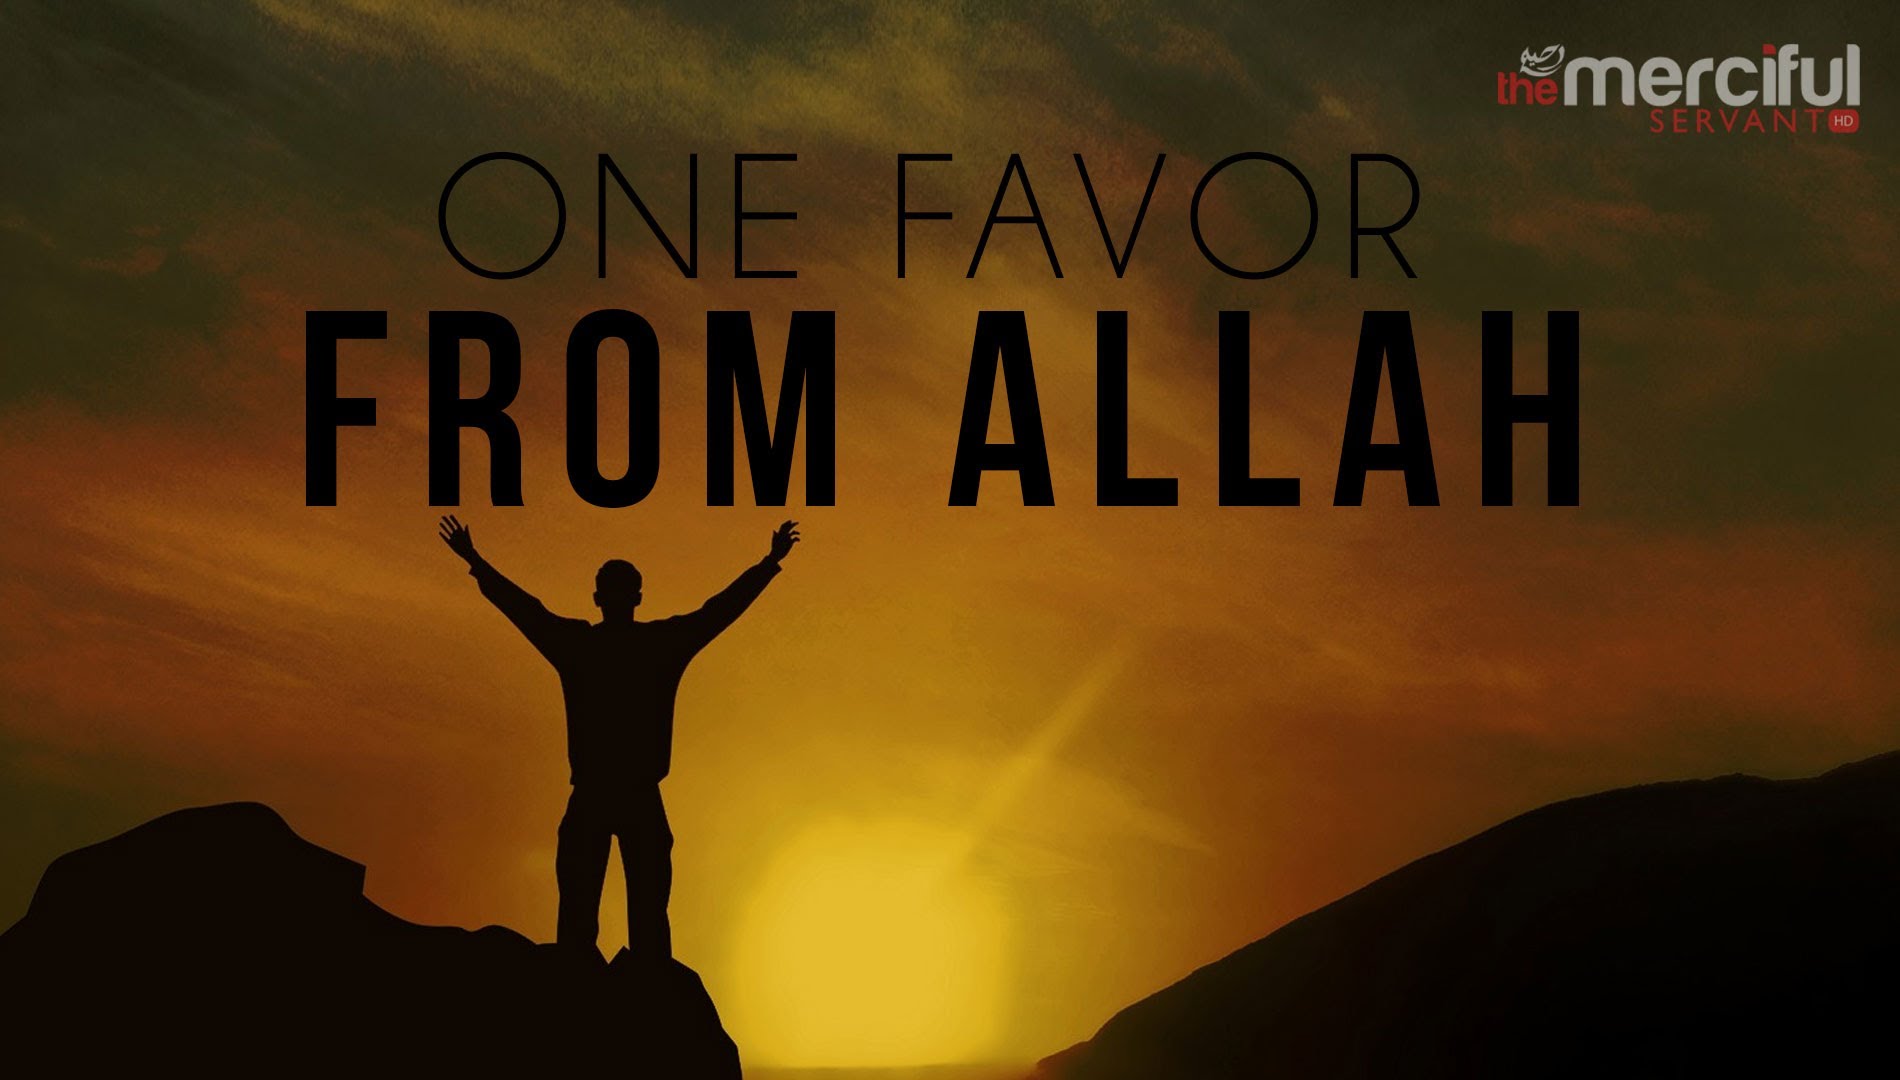 One Favor From Allah - Islam - MercifulServant